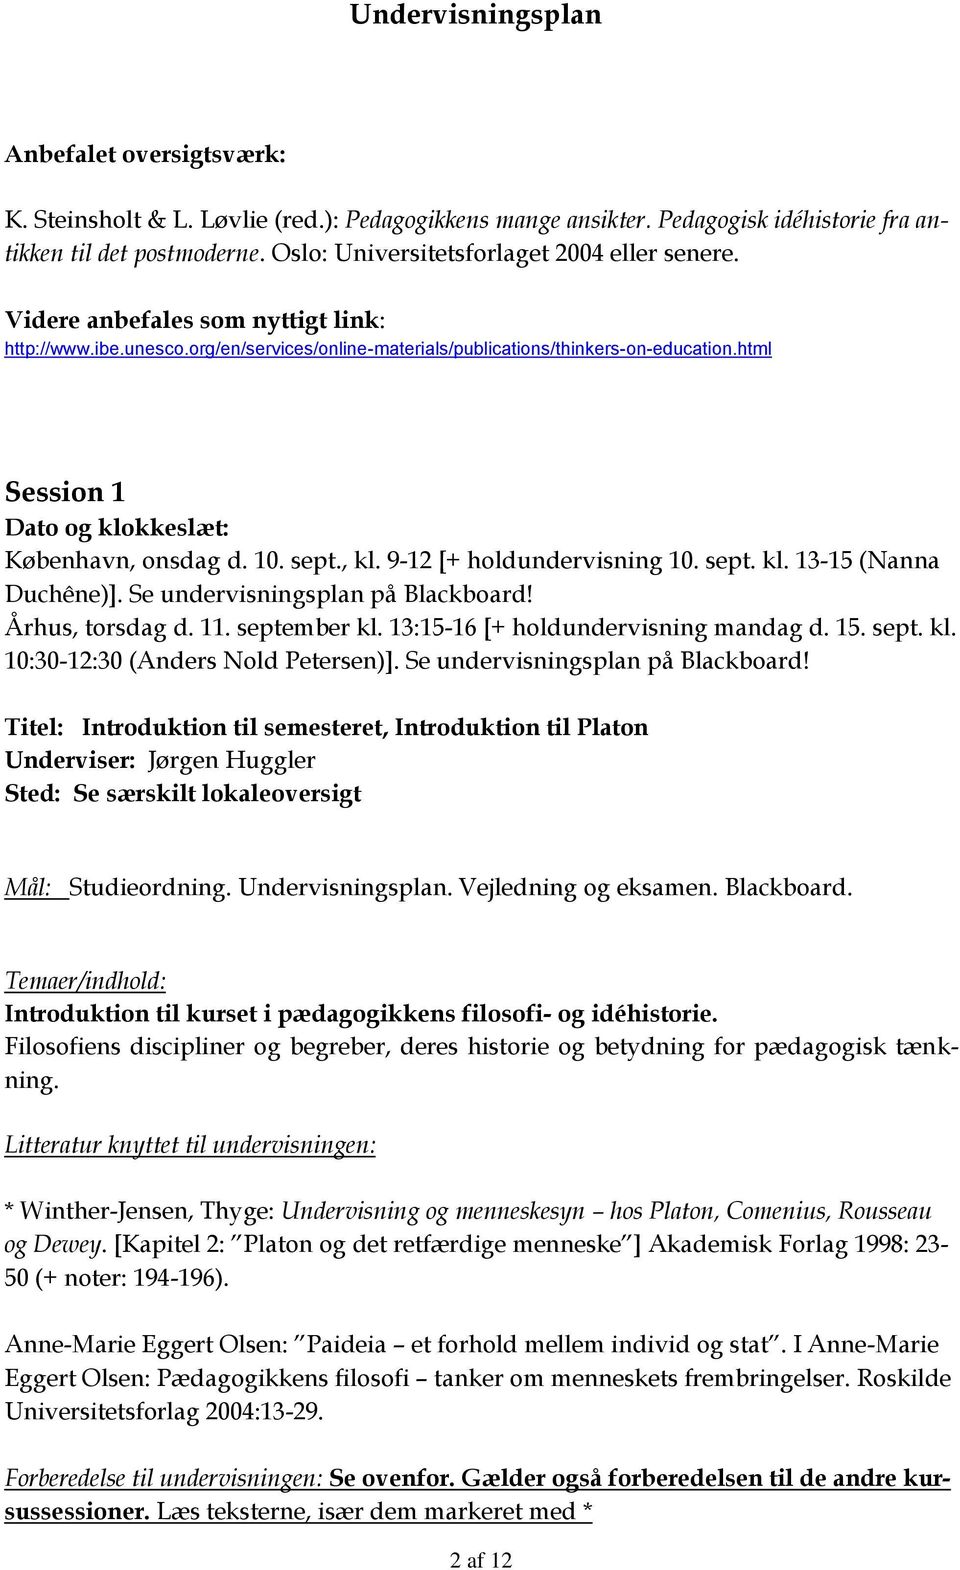 9-12 [+ holdundervisning 10. sept. kl. 13-15 (Nanna Duchêne)]. Se undervisningsplan på Blackboard! Århus, torsdag d. 11. september kl. 13:15-16 [+ holdundervisning mandag d. 15. sept. kl. 10:30-12:30 (Anders Nold Petersen)].